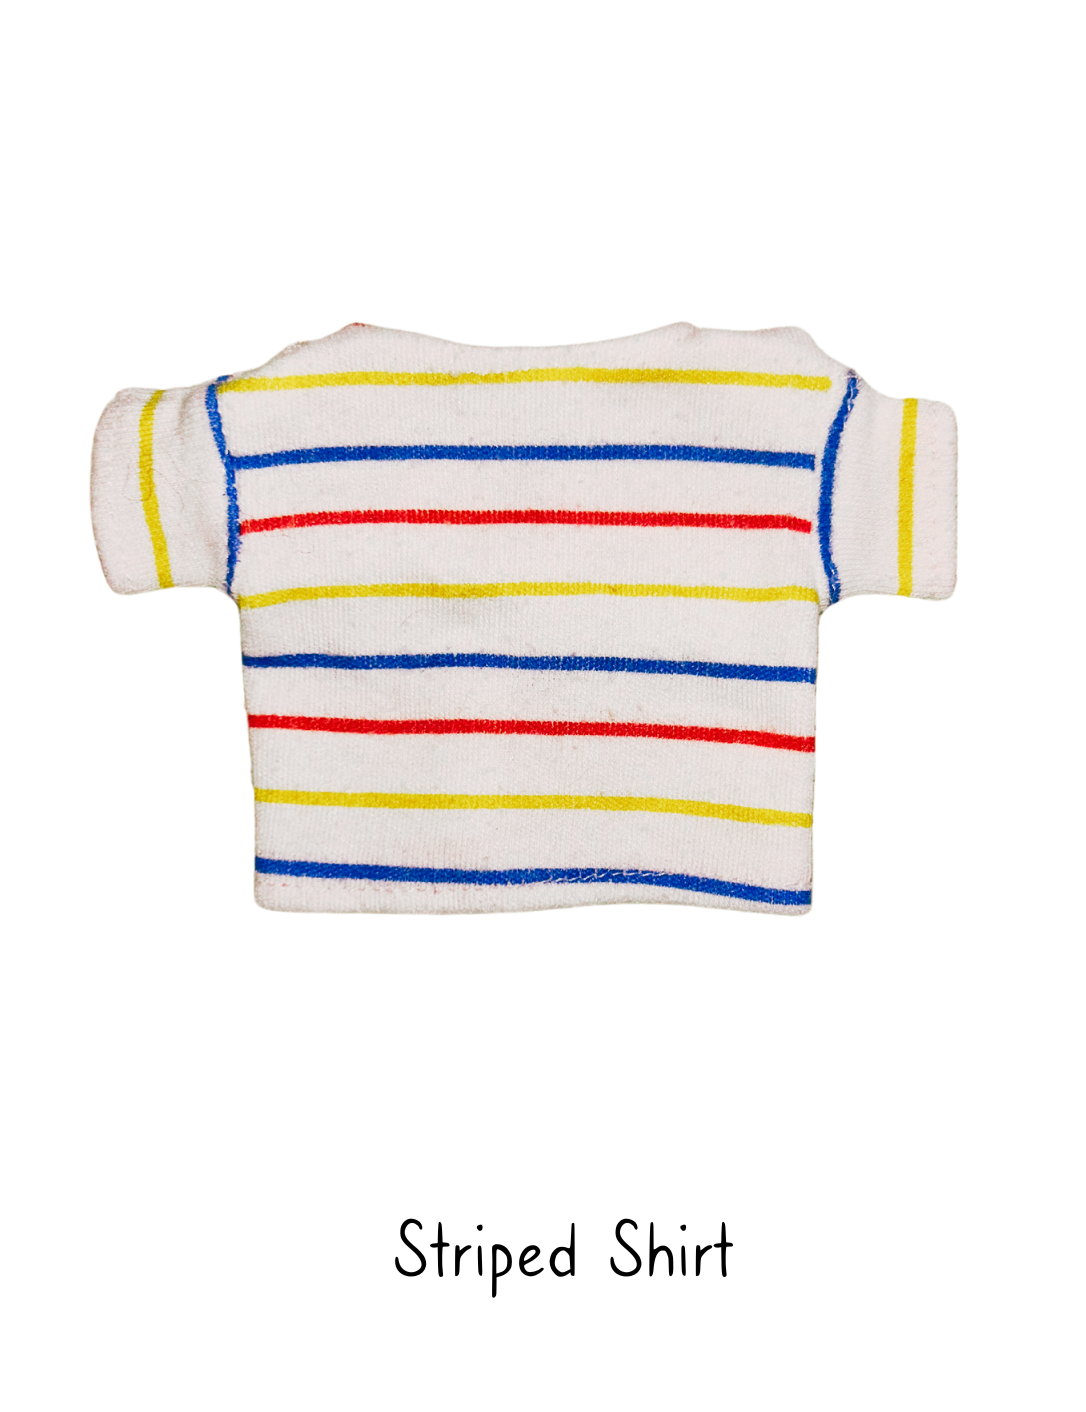 1983 Pedigree Sindy Doll Casuals 44002 Striped Shirt